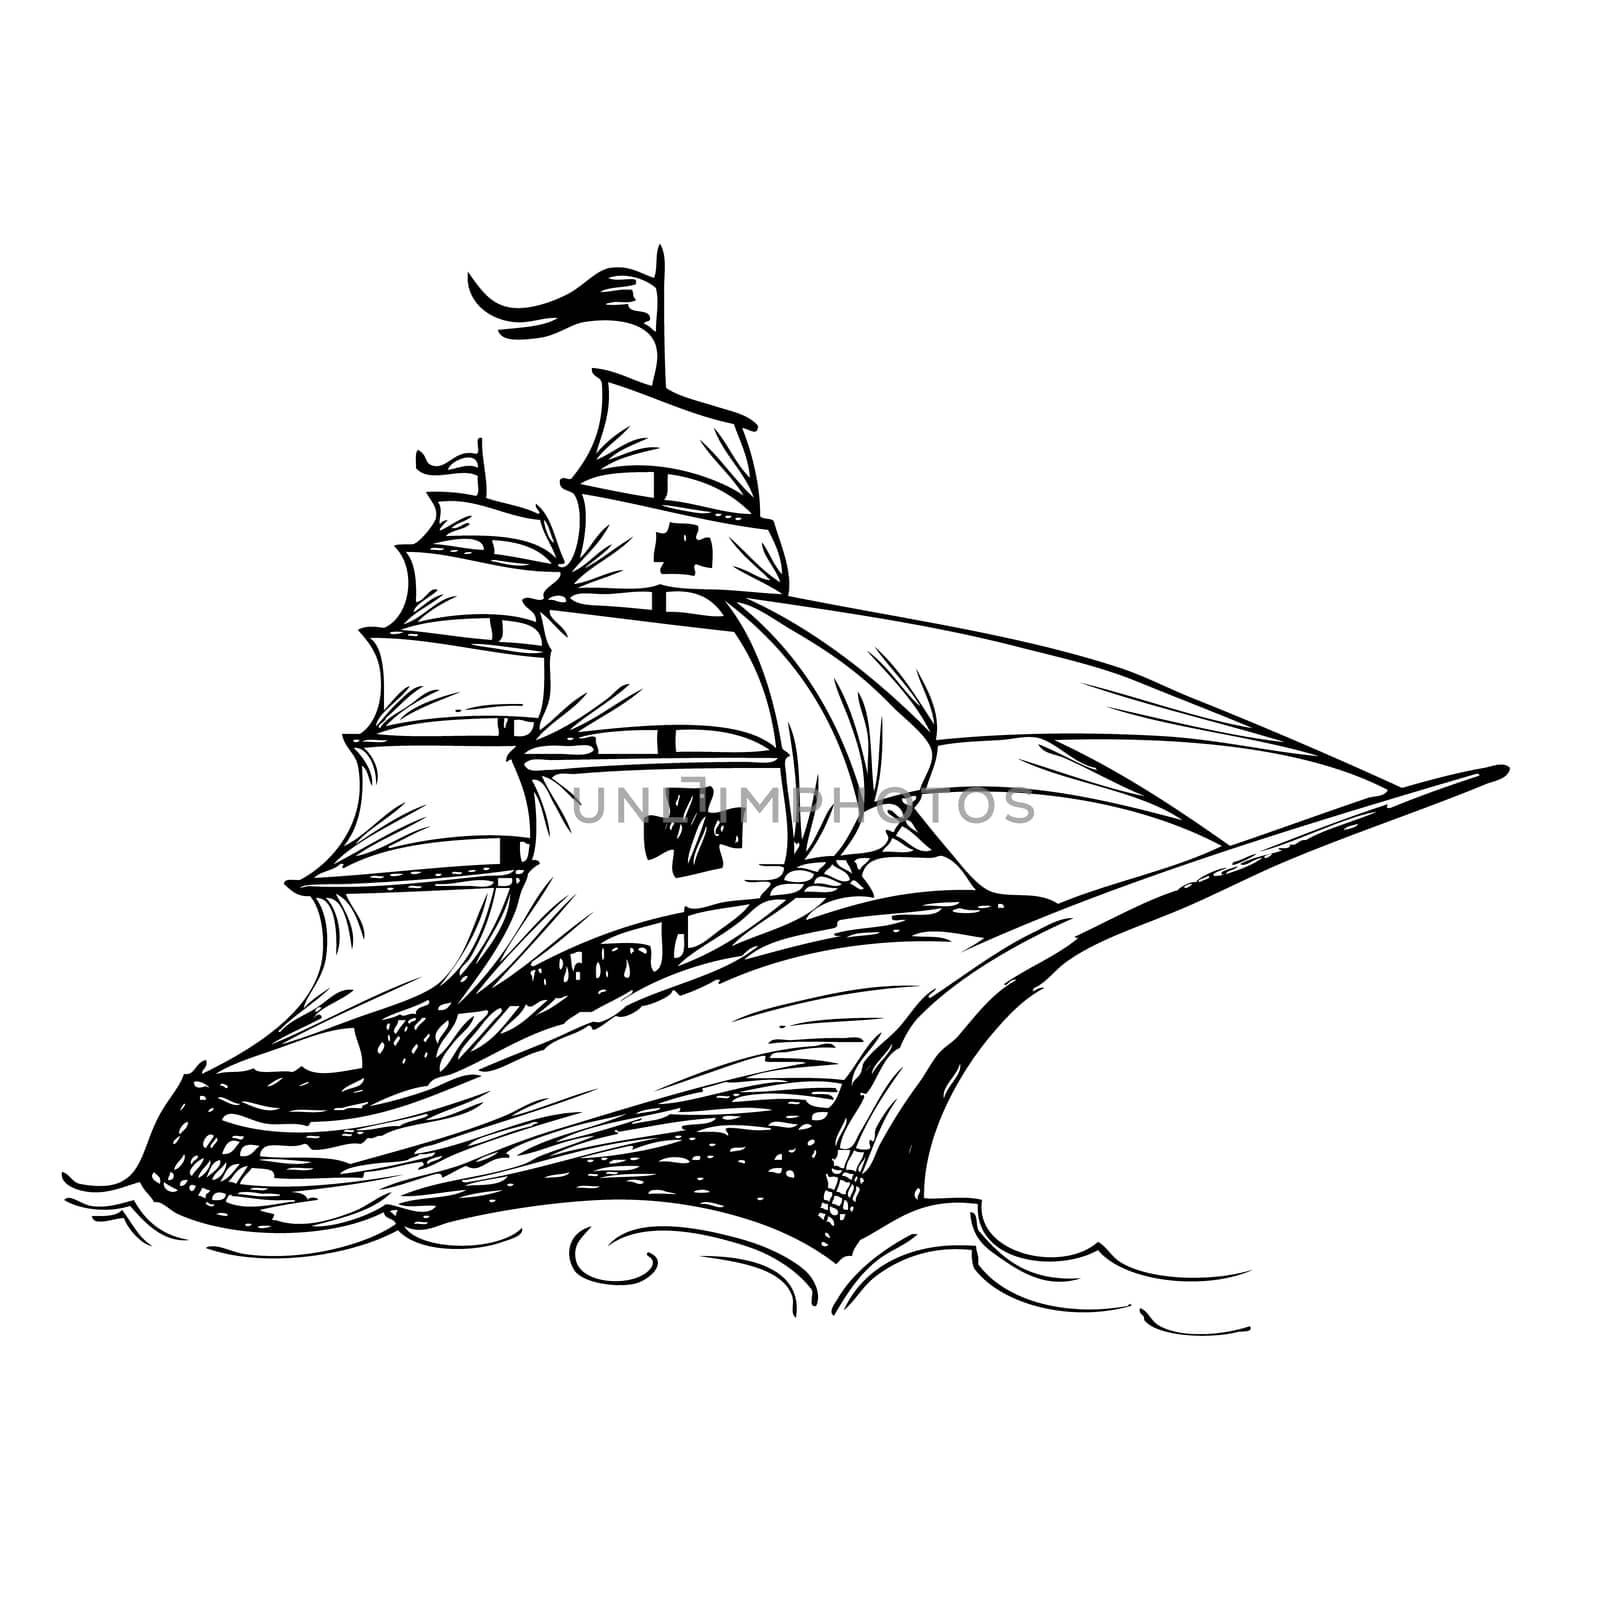 Columbus ship hand drawn by simpleBE